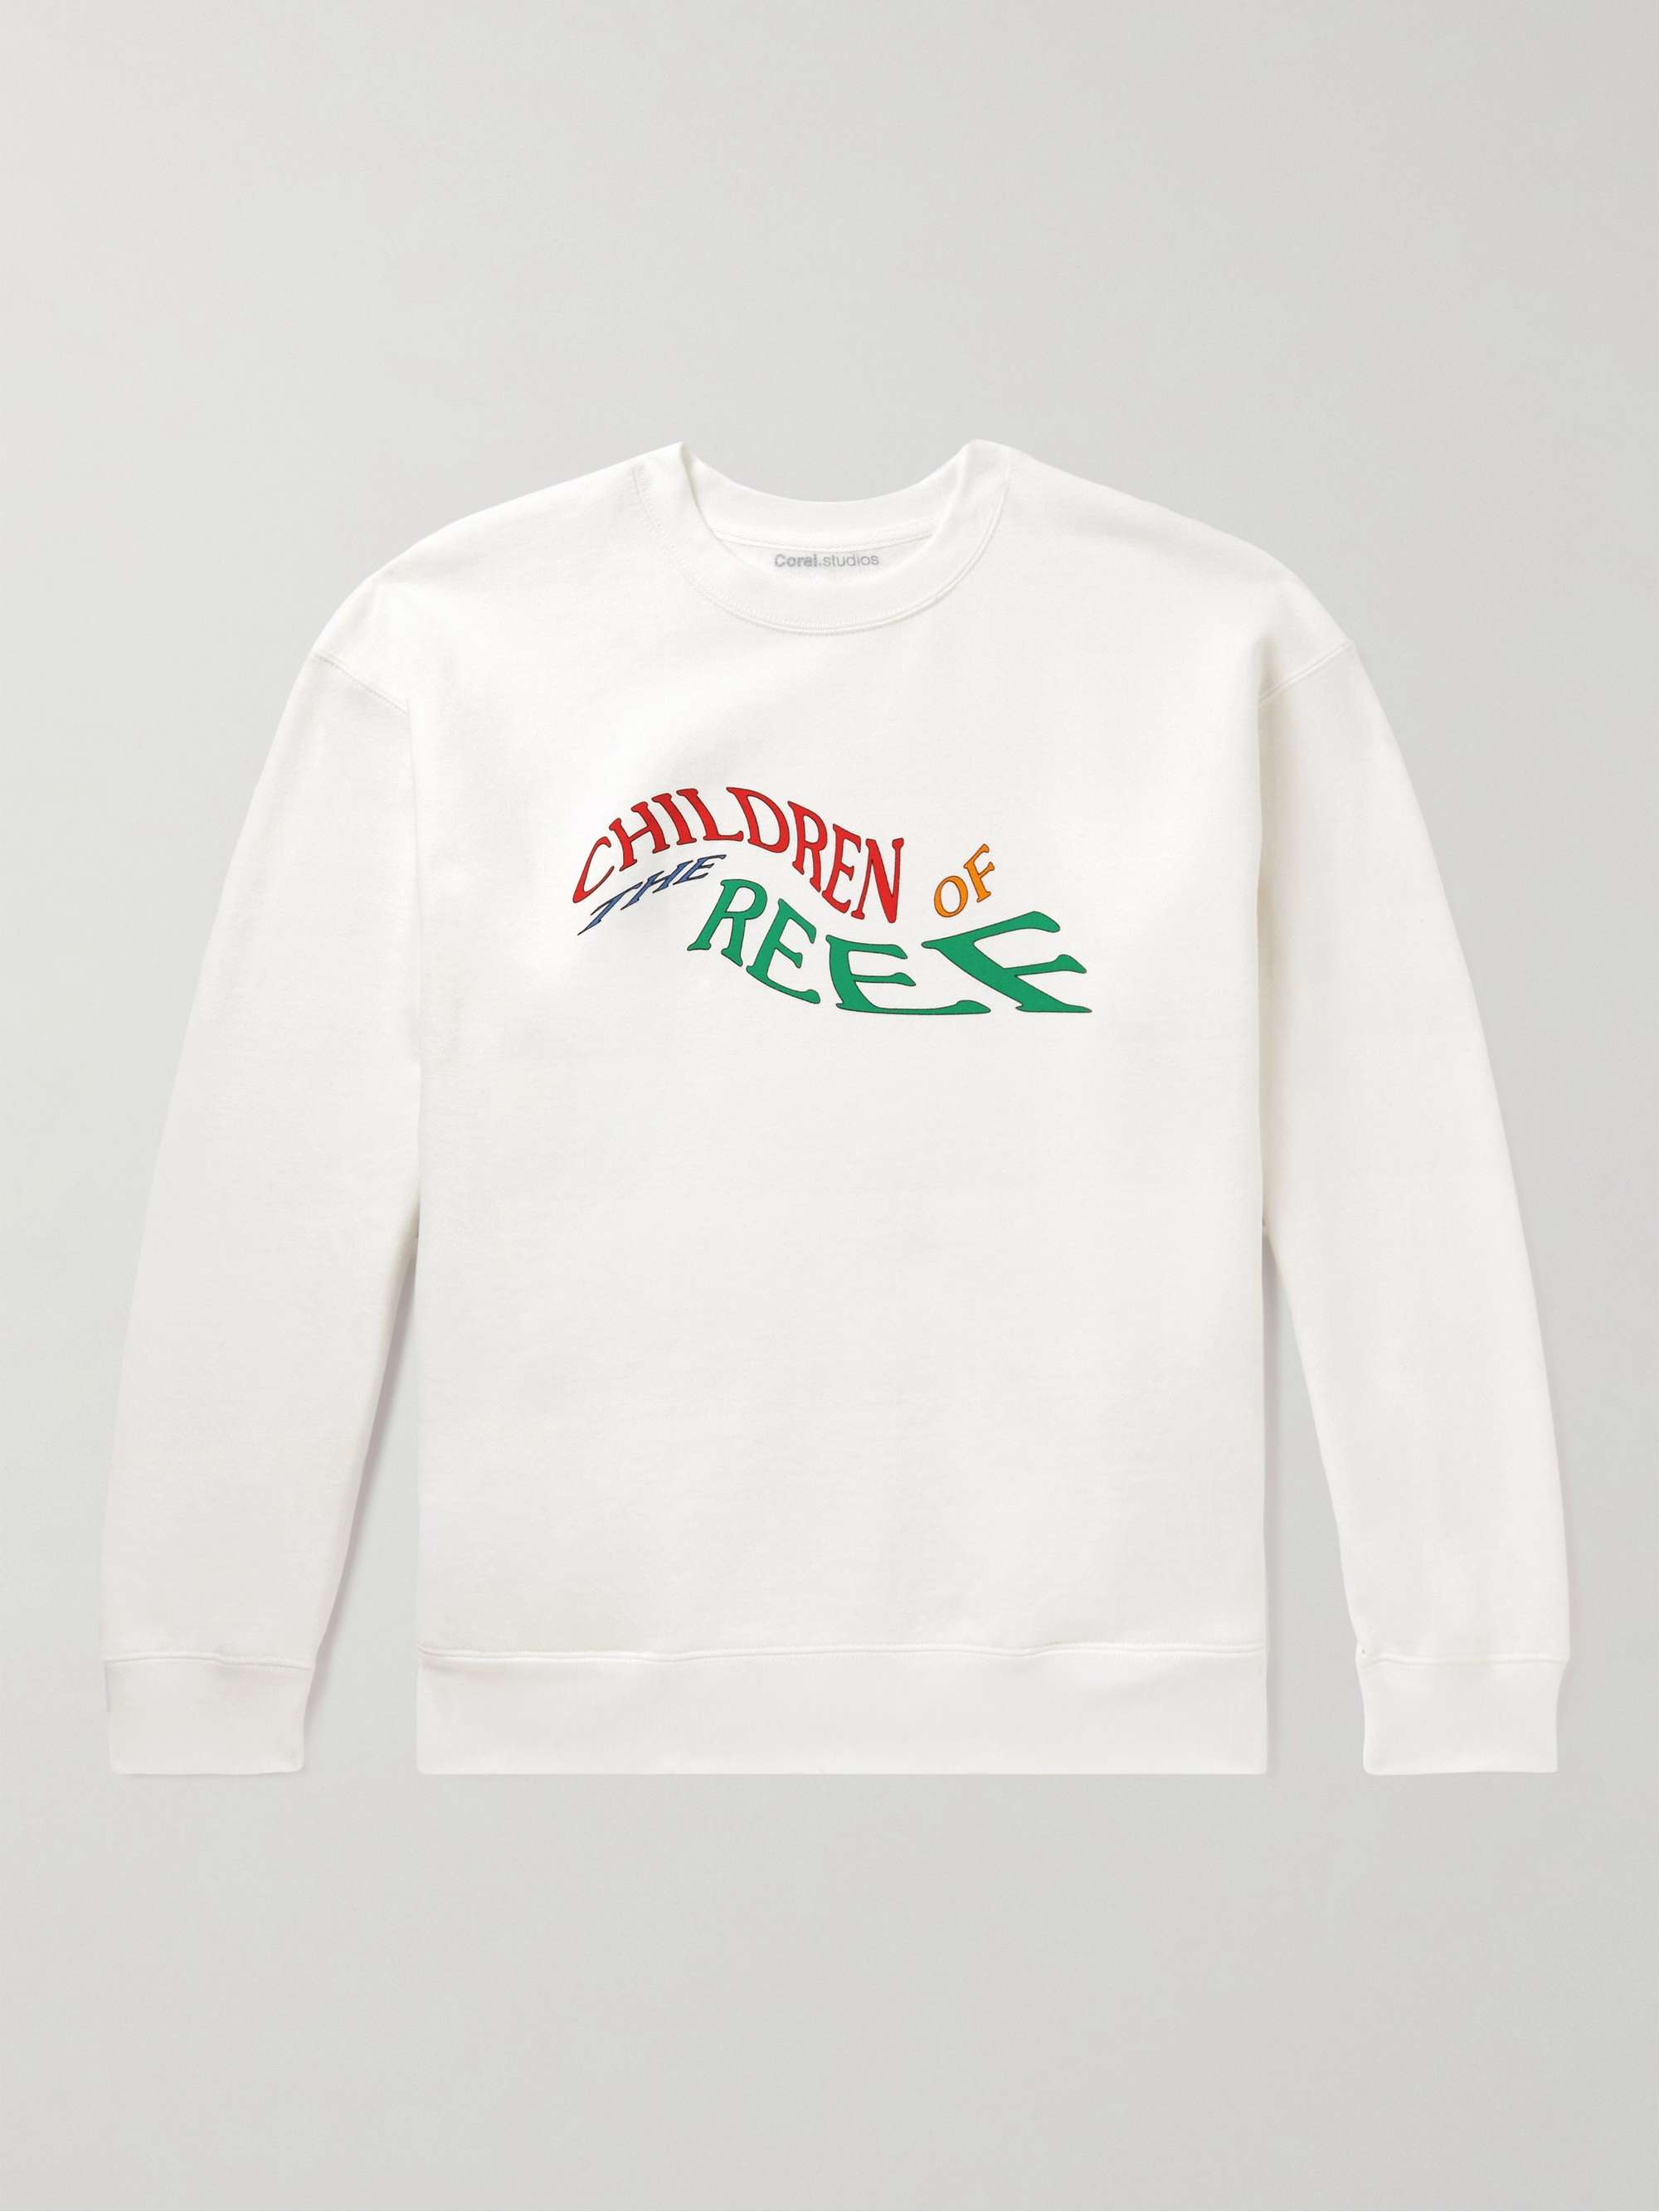 CORAL STUDIOS Children of the Reef Printed Cotton-Jersey Sweatshirt for Men  | MR PORTER